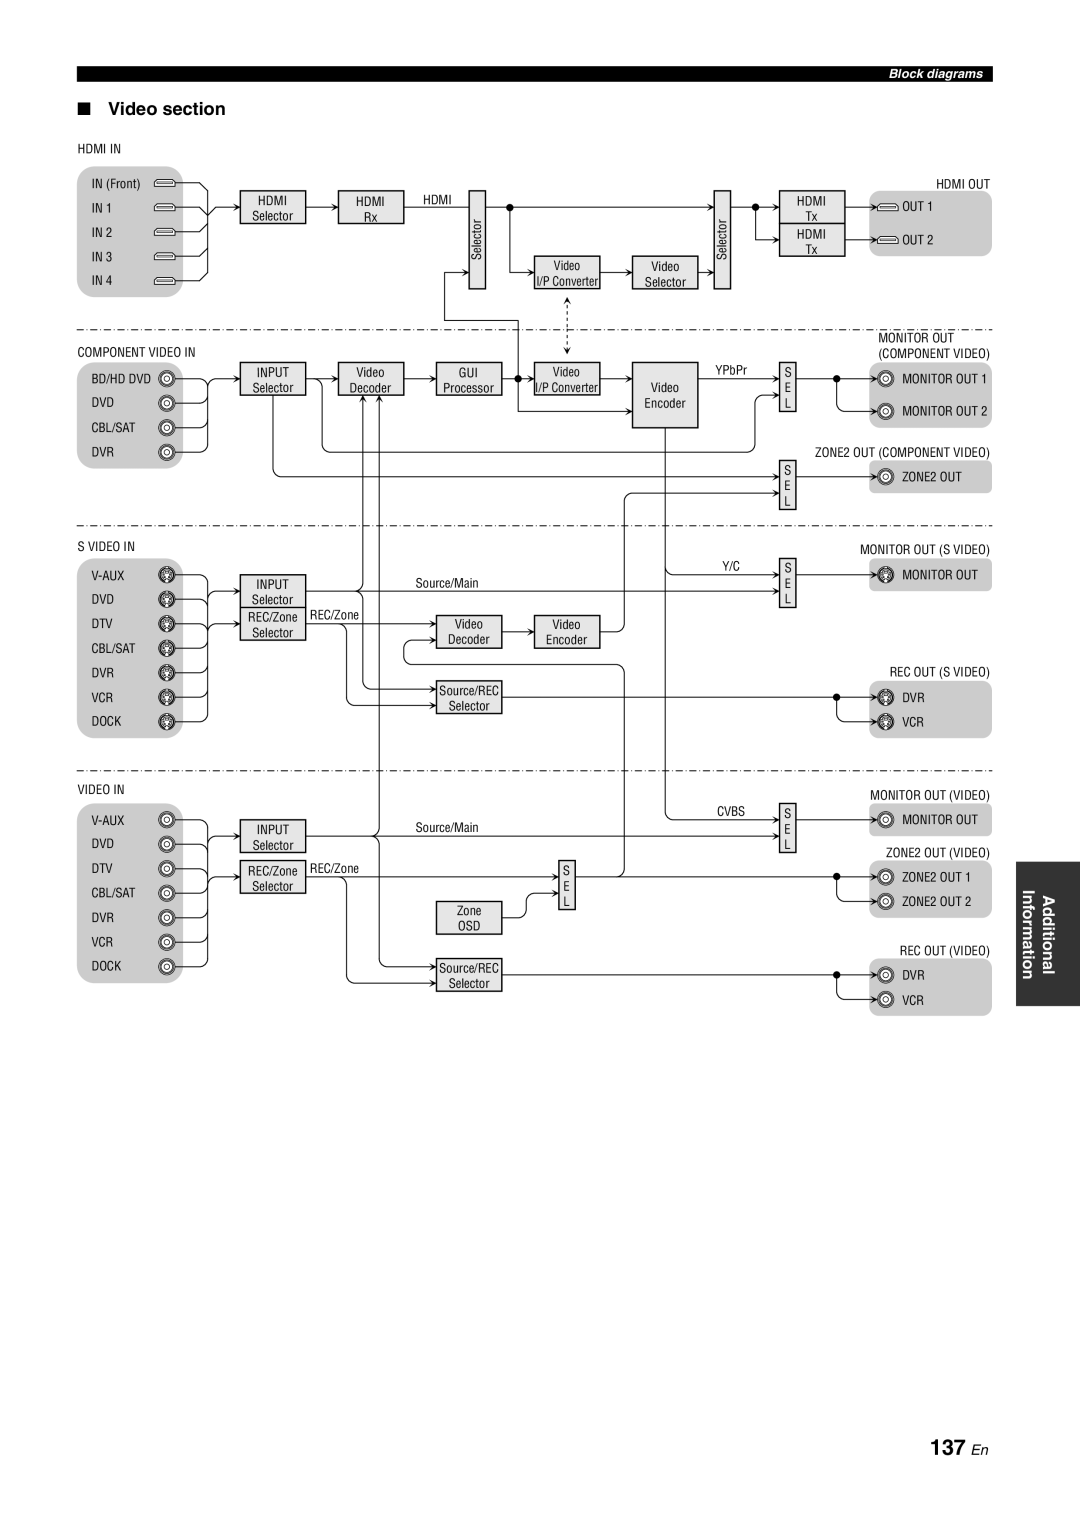 Yamaha DSP-Z11 owner manual 137 En, Video section, Information, Additional, Block diagrams 